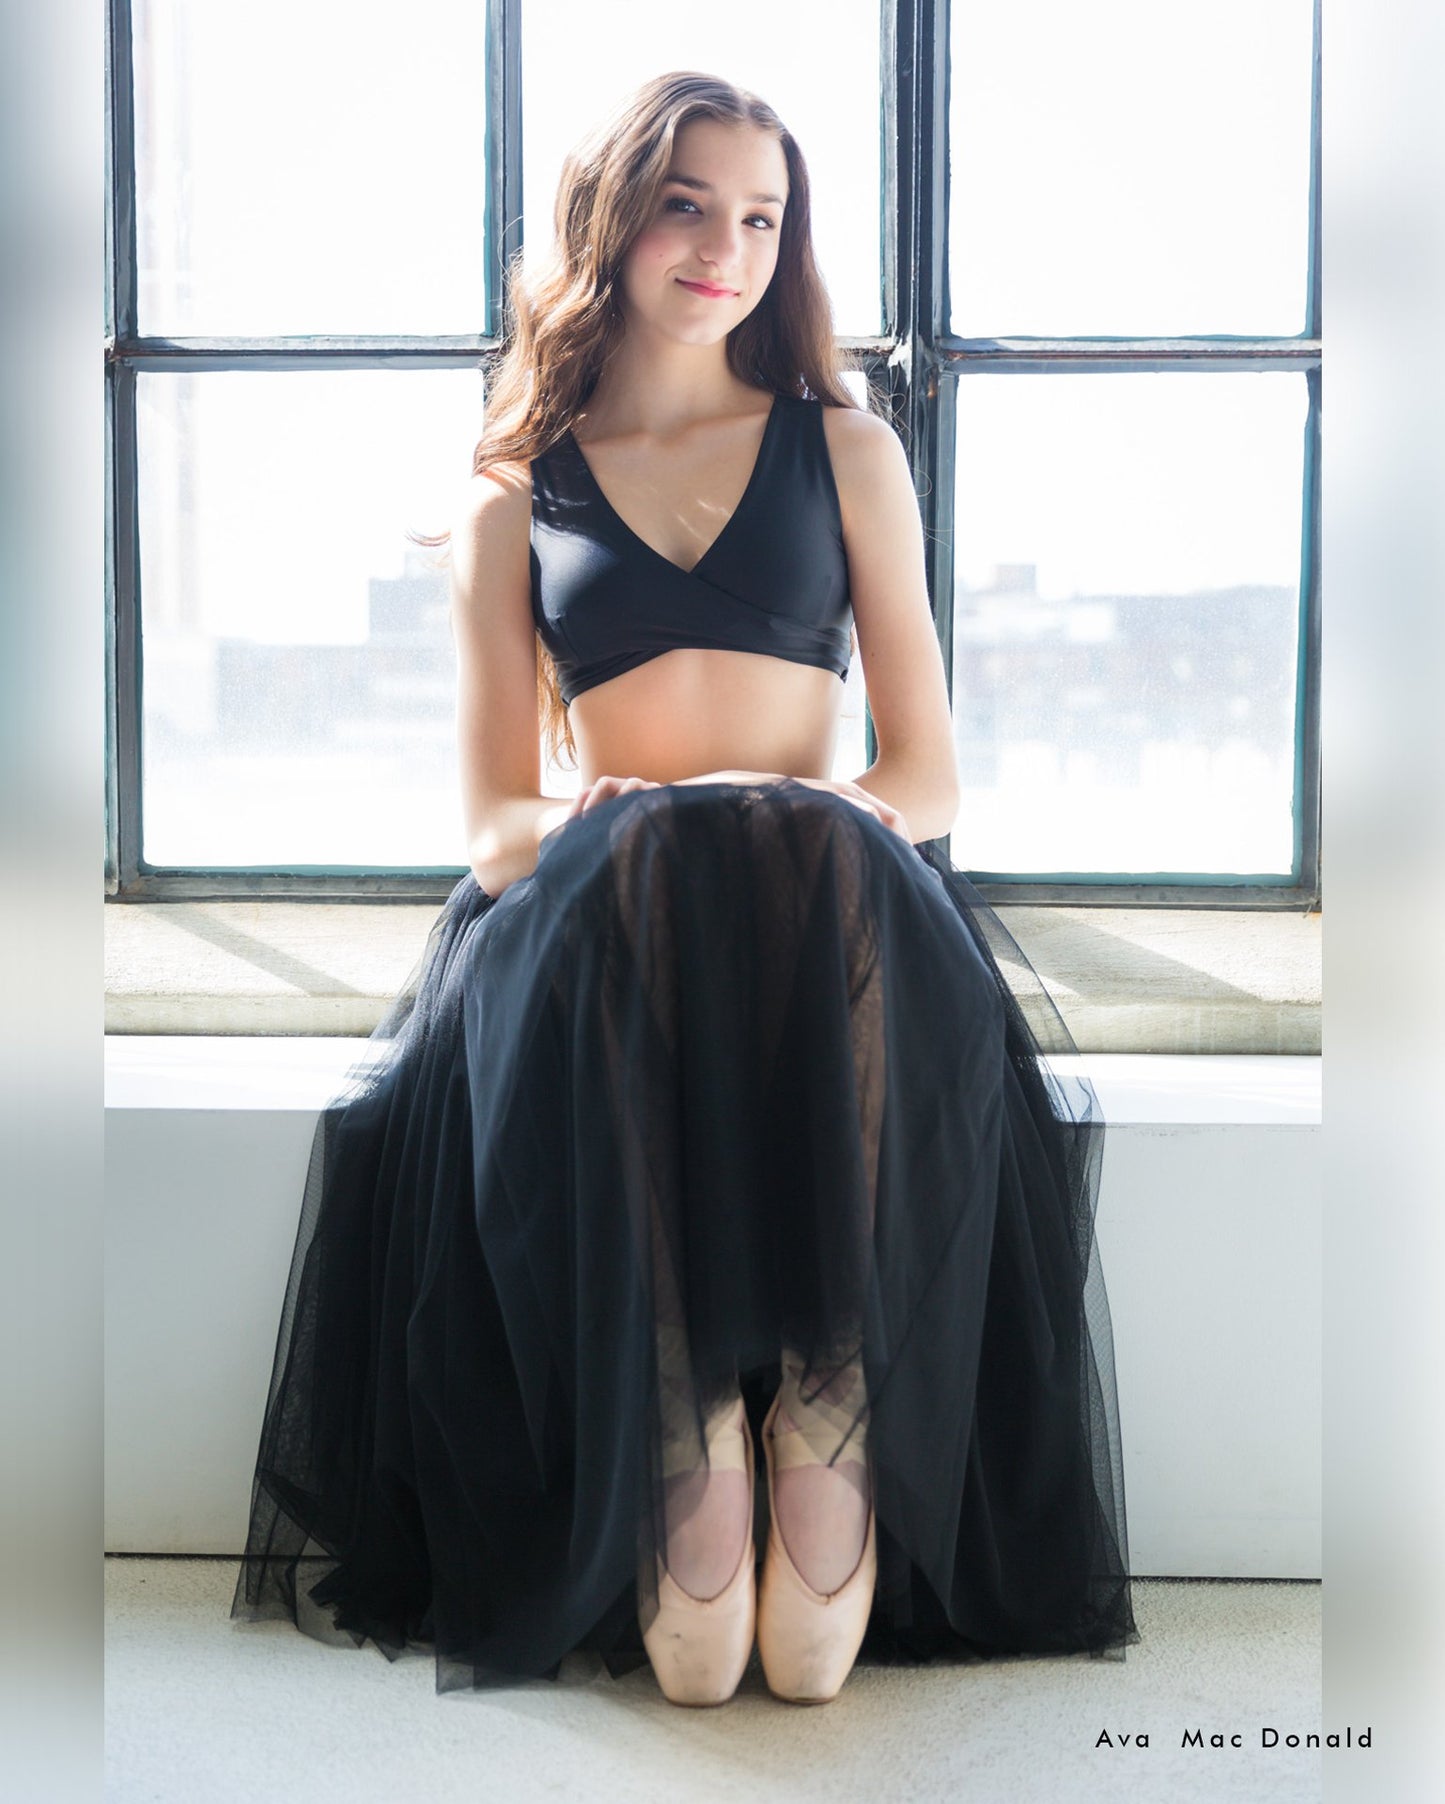 Black romantic ballet tutu skirt for ballerina. Dancer Ava wears professional dancewear from Callisto balletwear